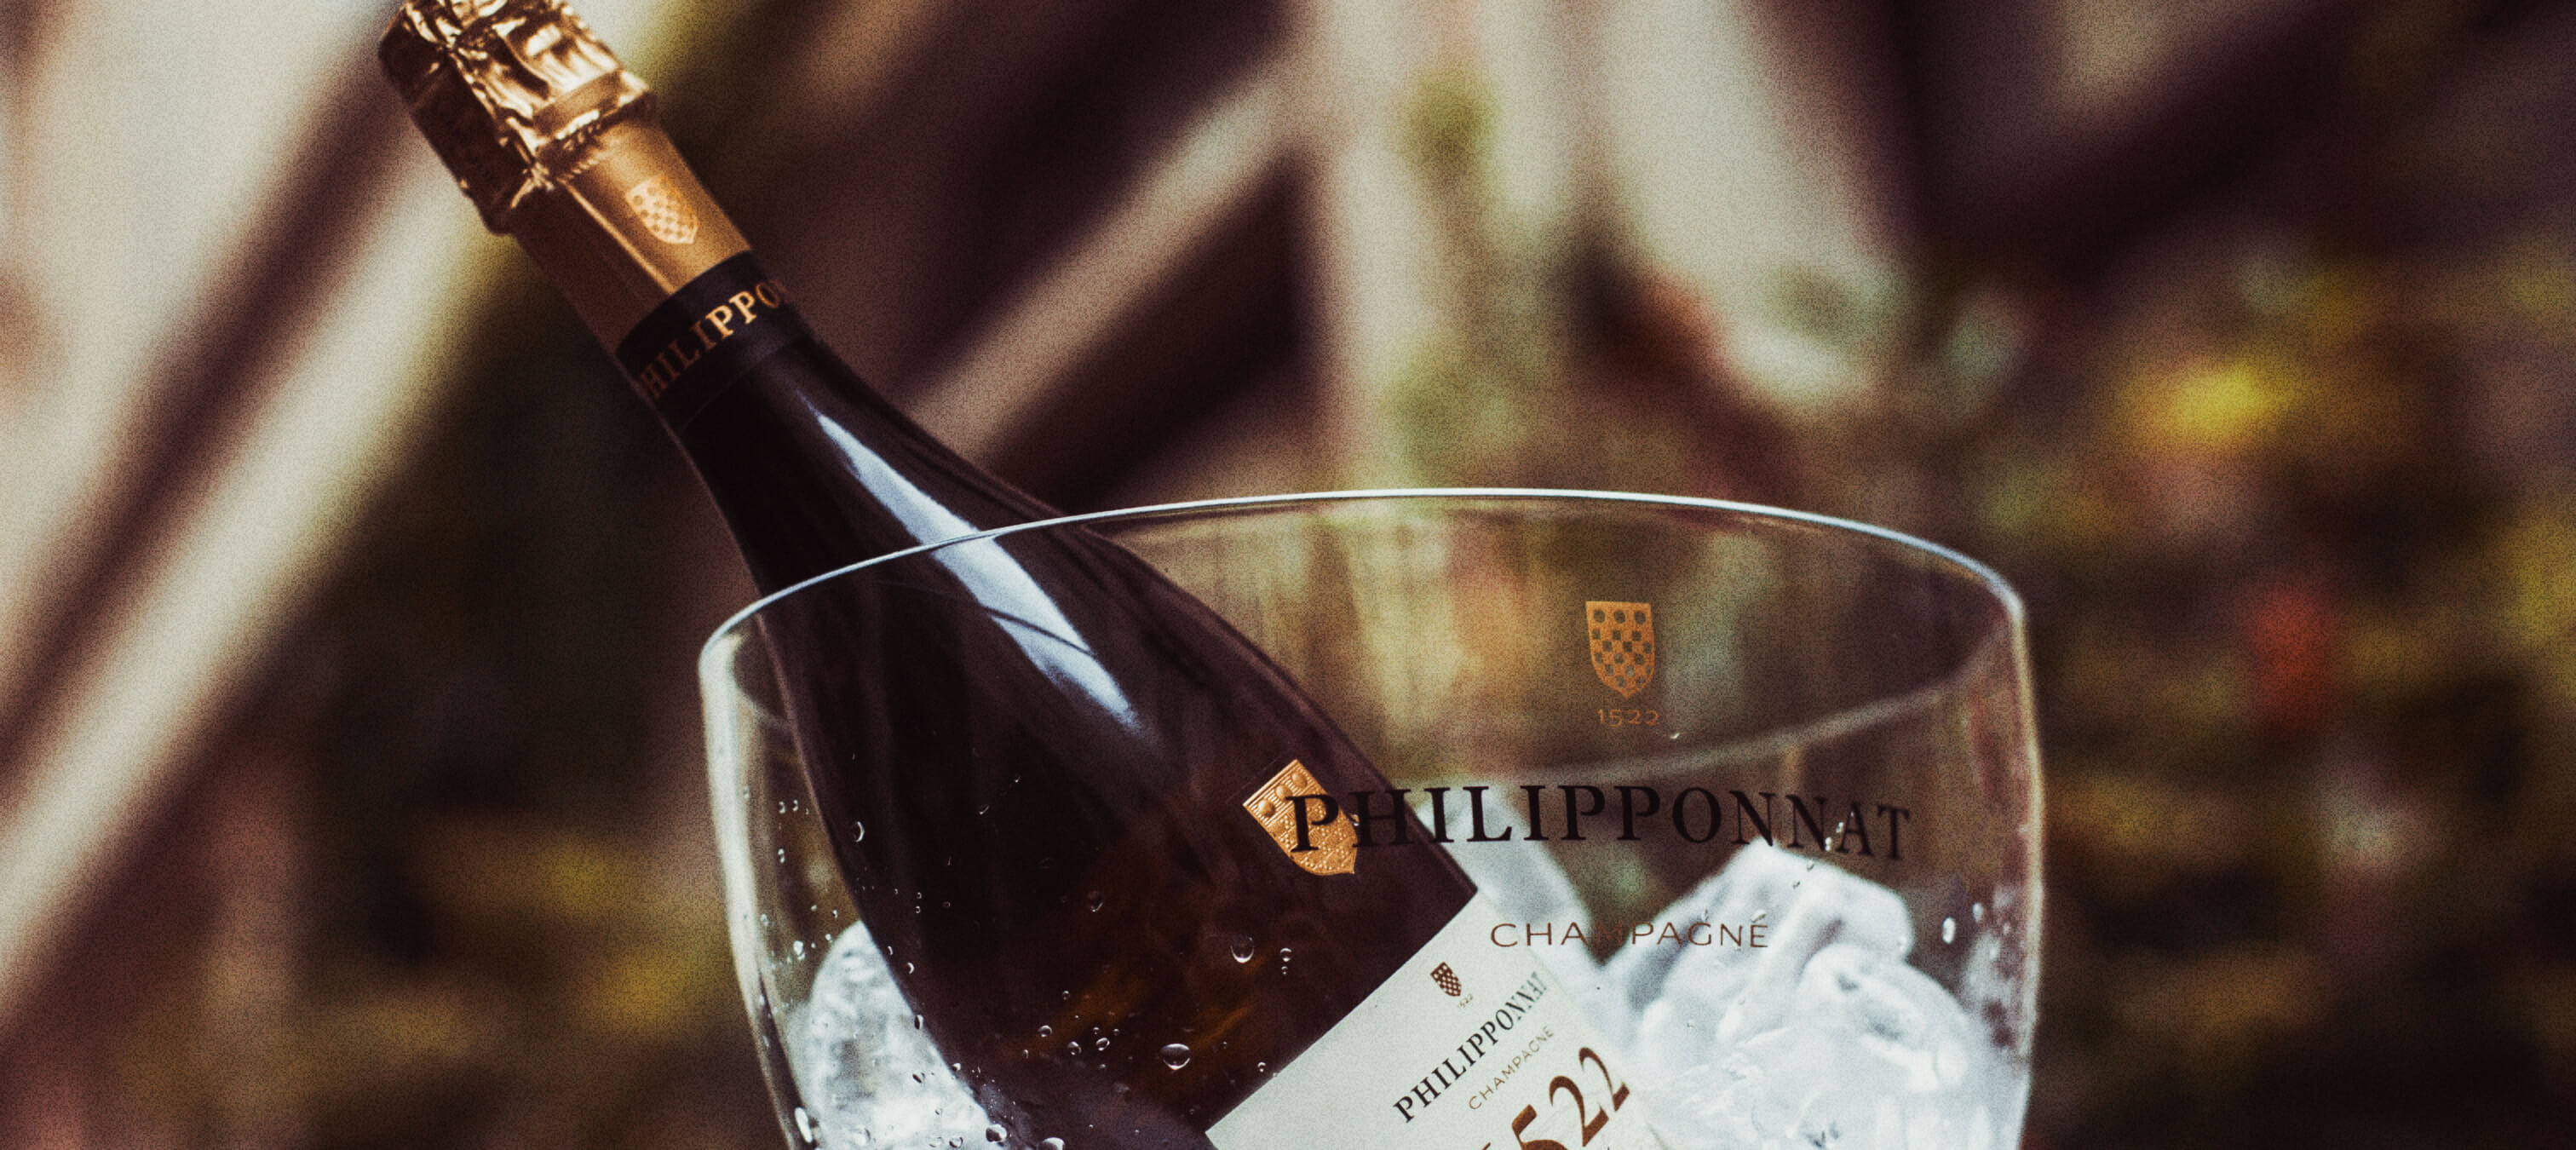 Champagne Philipponnat - Tête Chercheuse